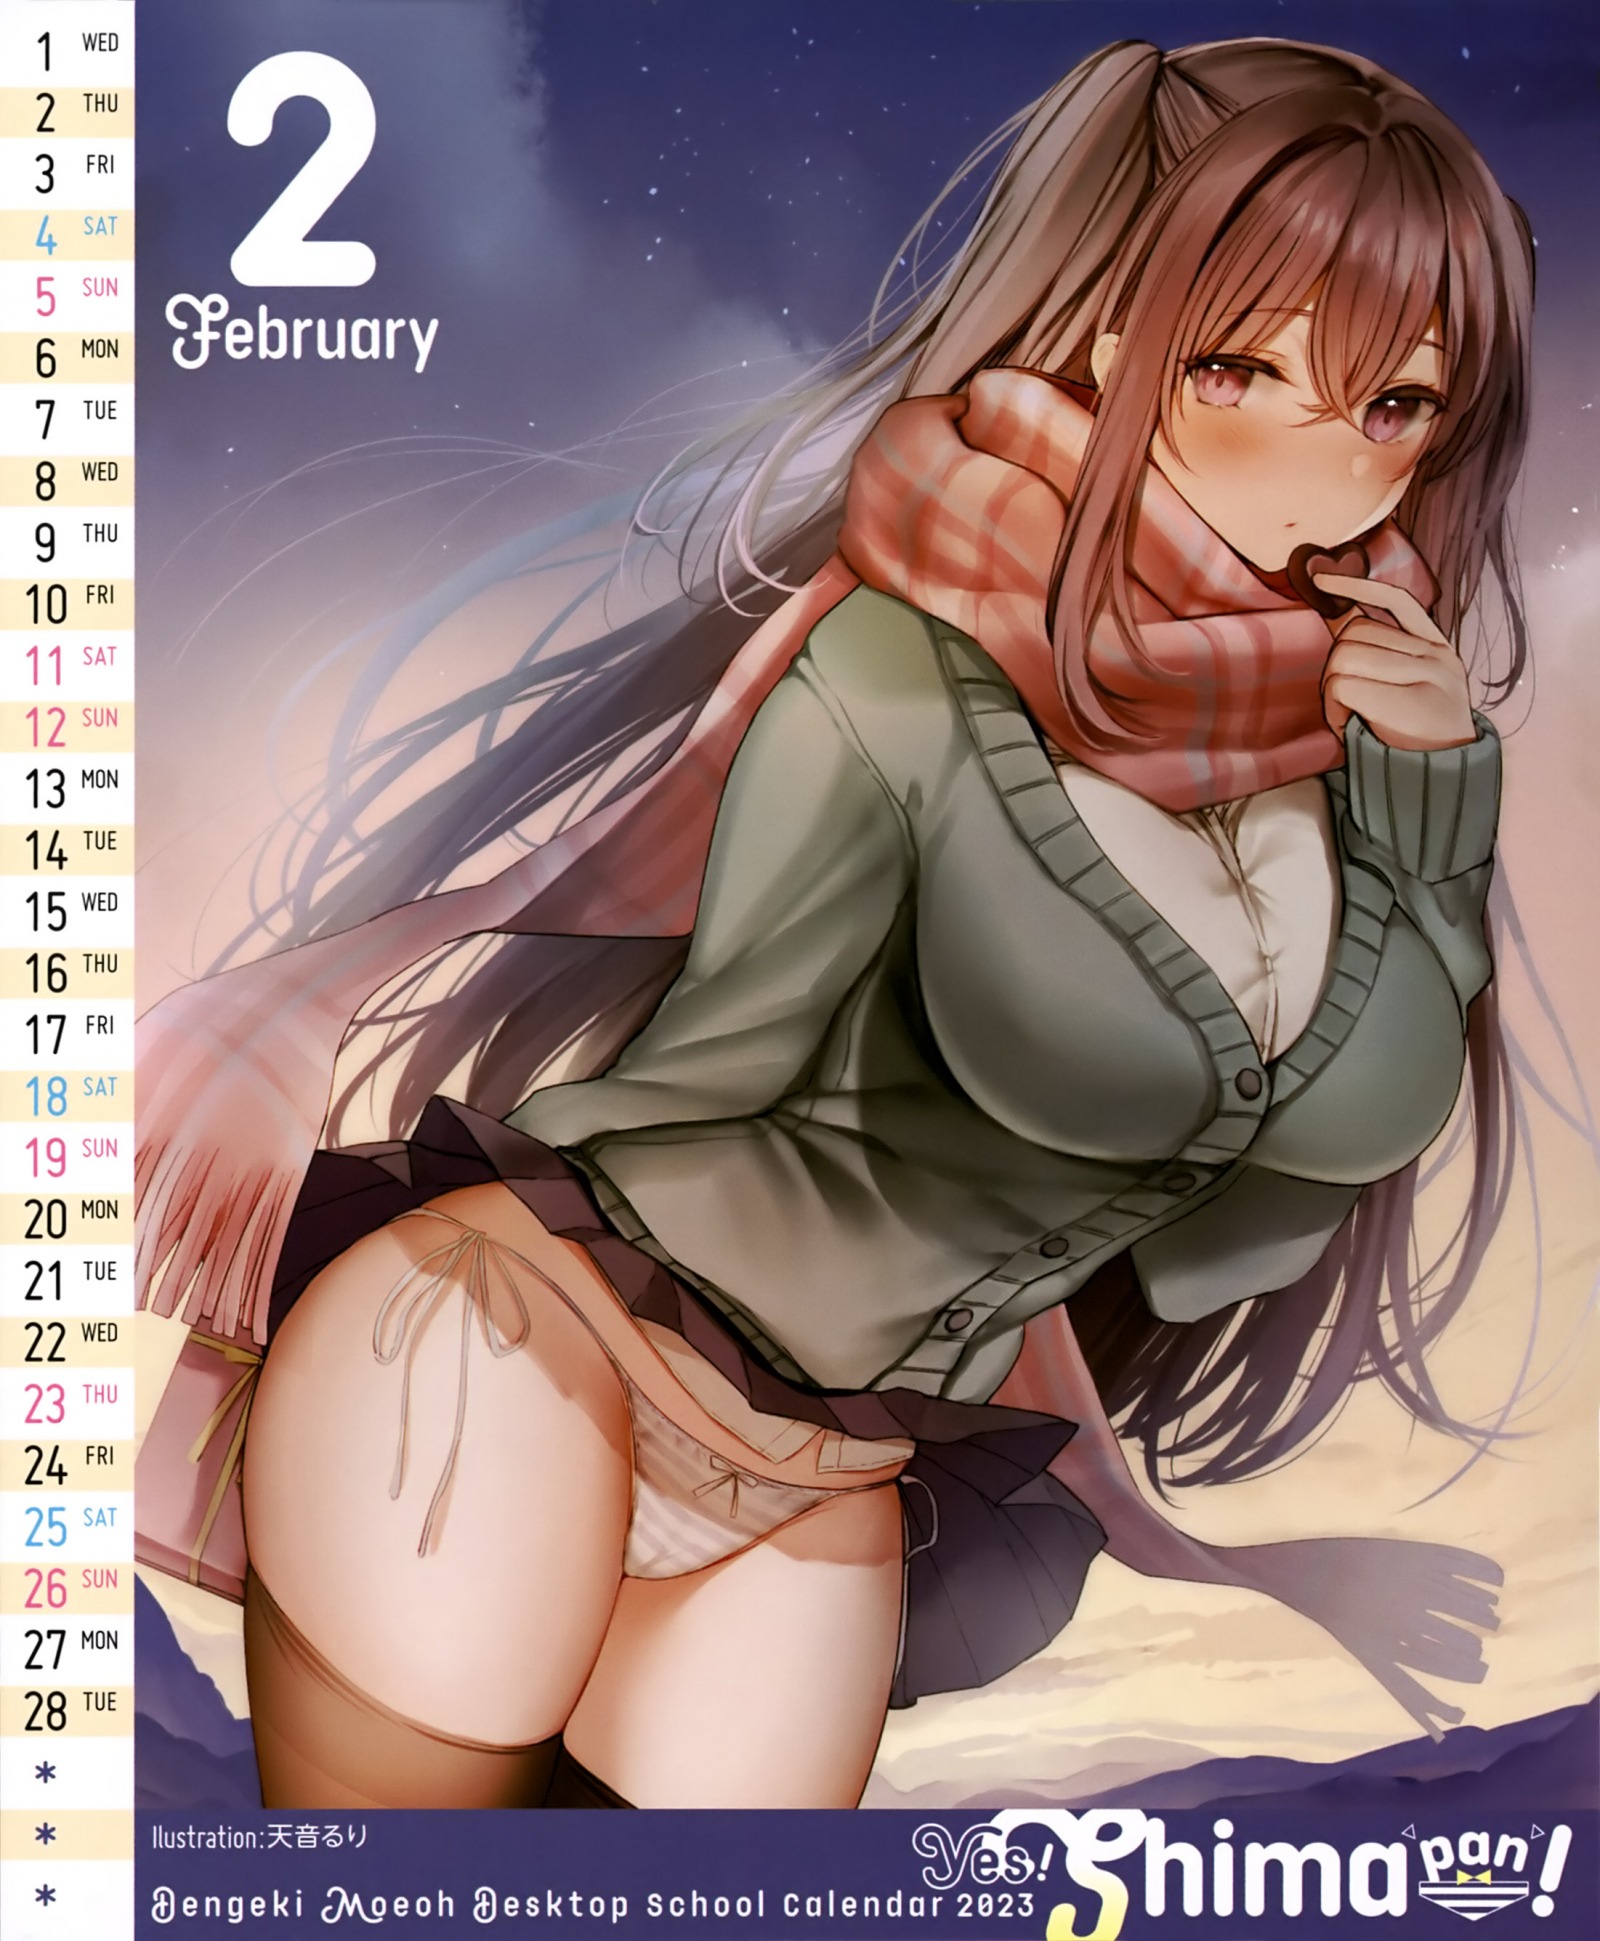  Dengeki Moeoh Desktop School Calendar 2022 Yes! Shima pan! [P3]